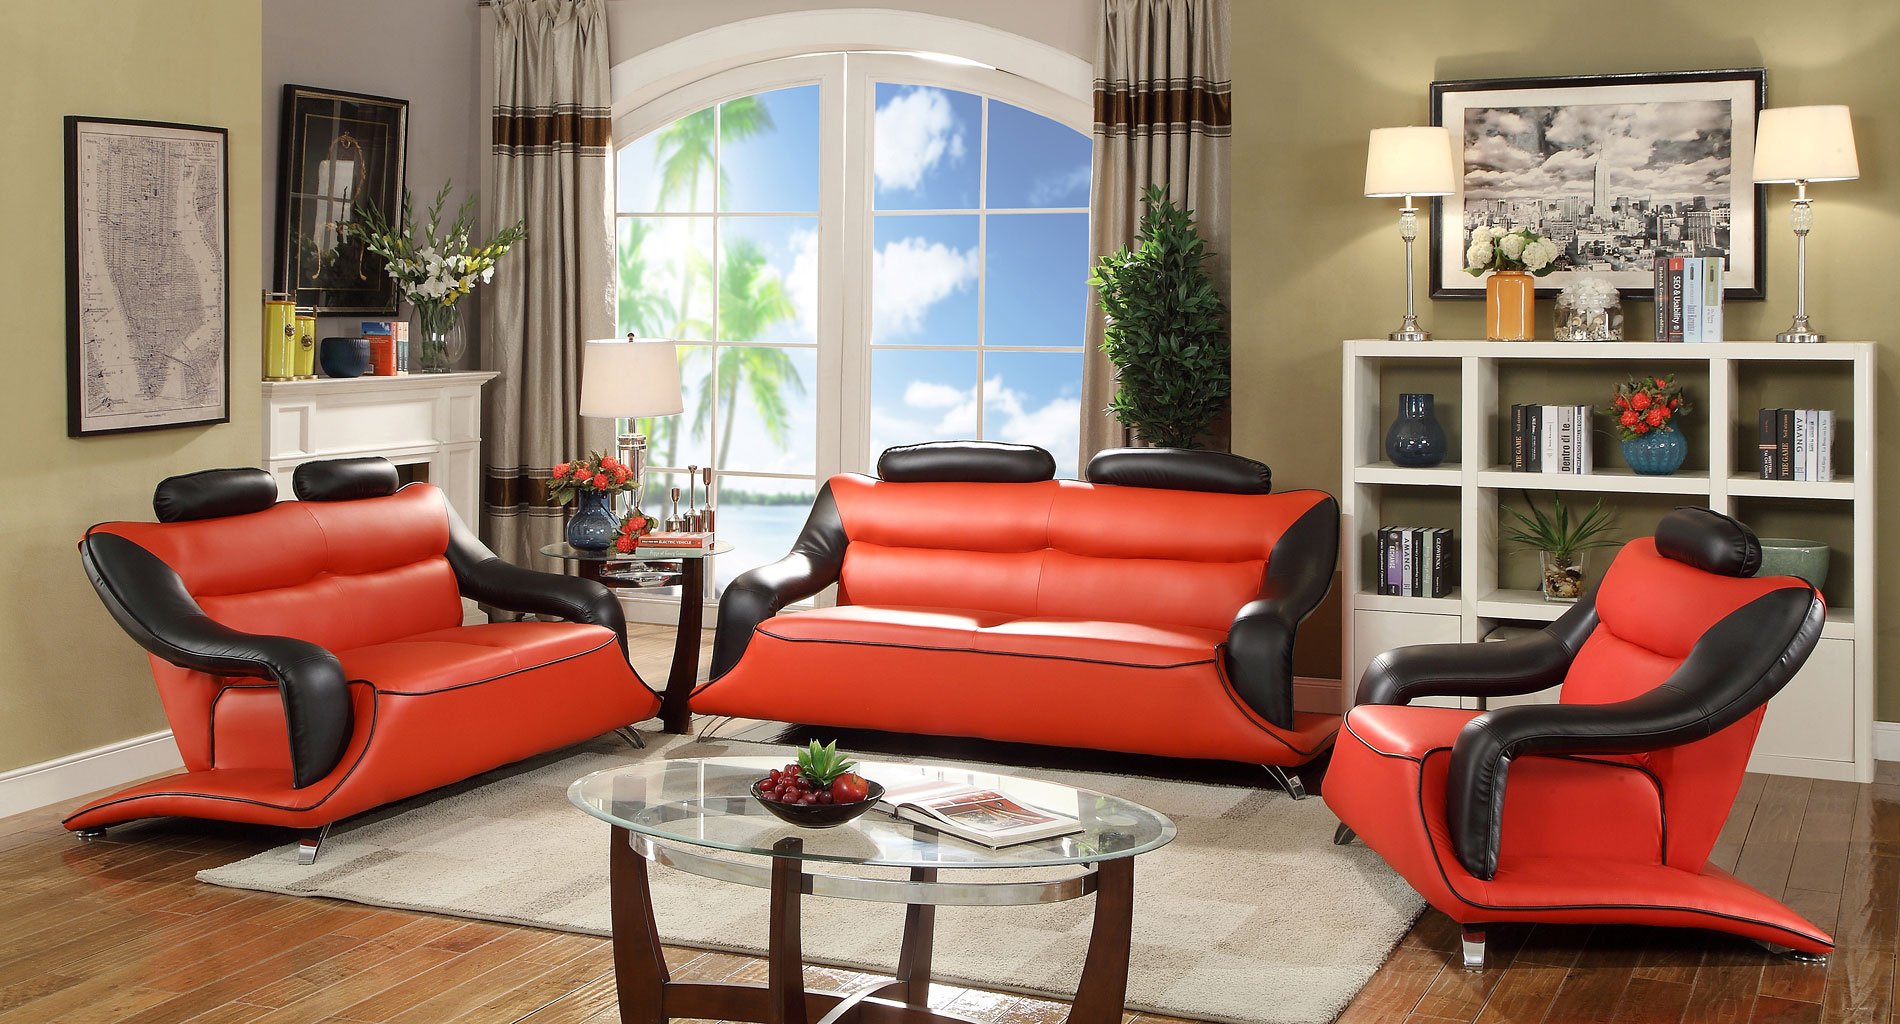 G346 Modern Living Room Set Red And Black By Glory Furniture FurniturePick